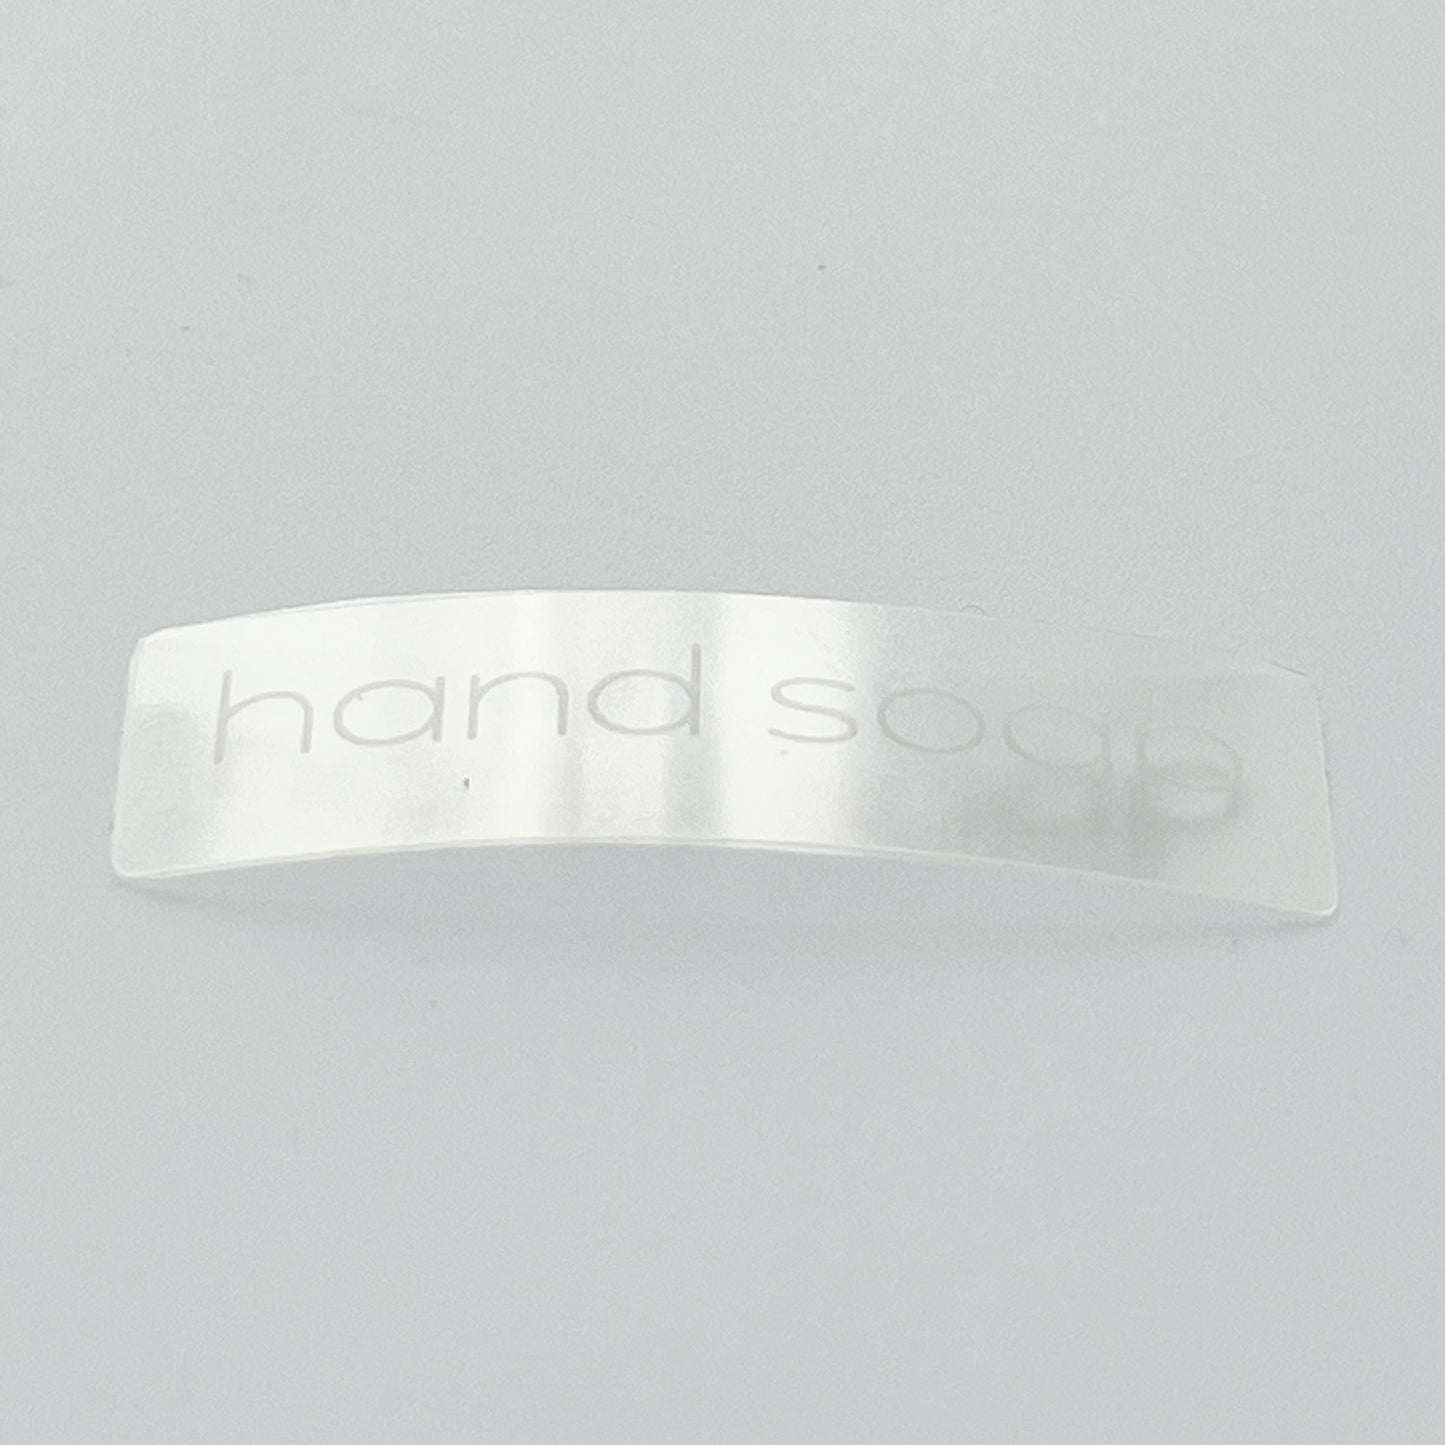 Hand Soap | Label